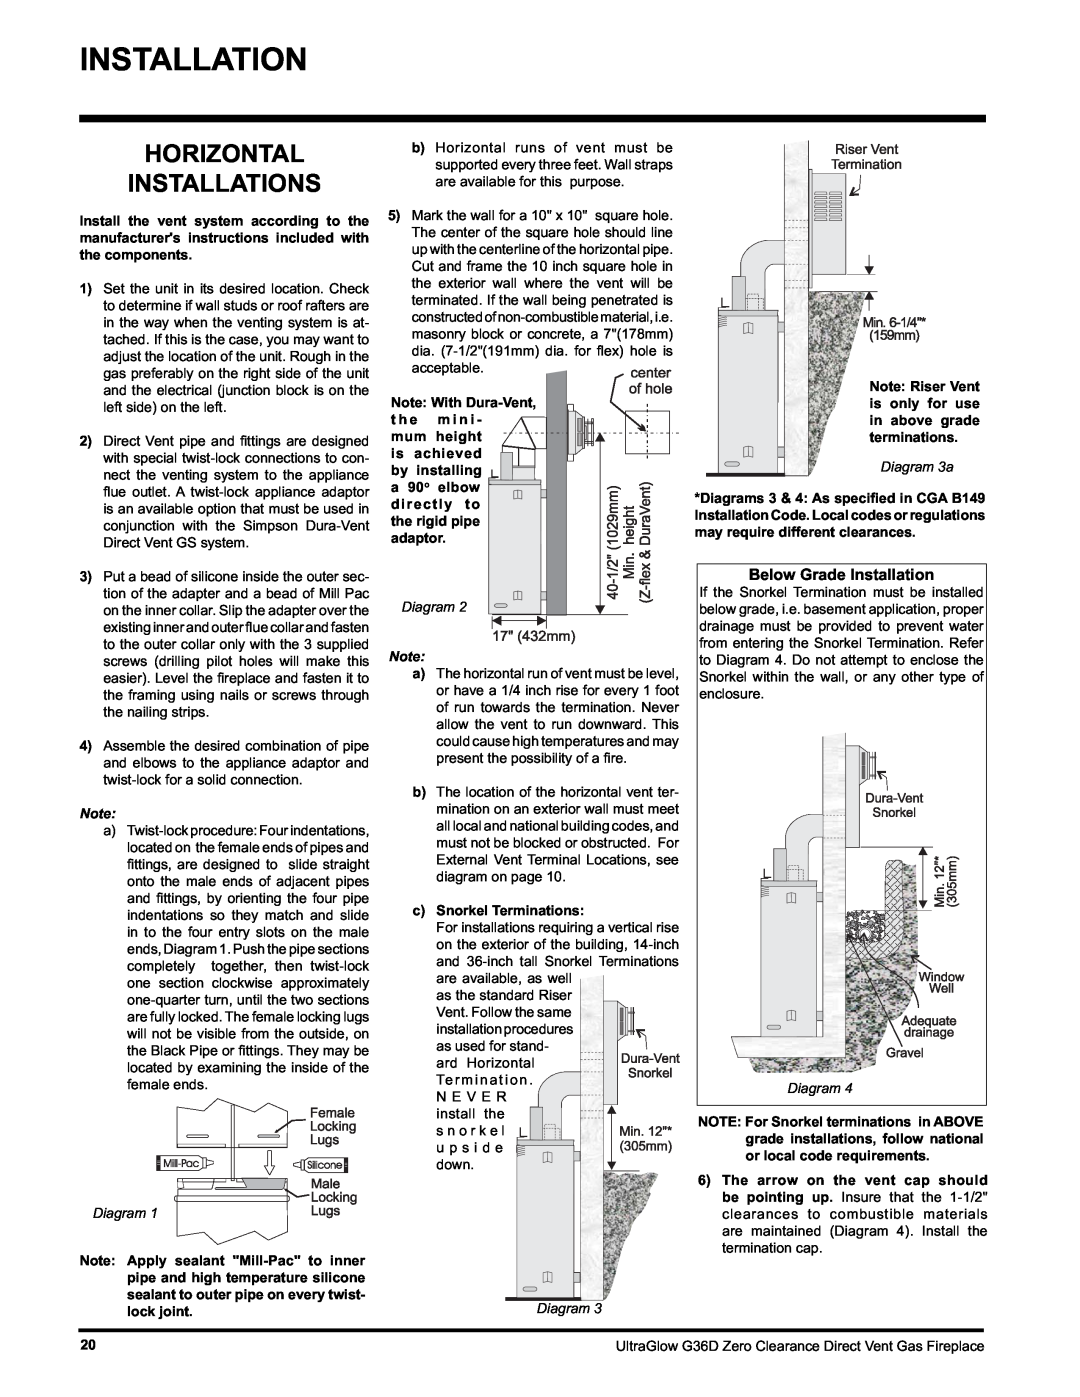 Regency G36D-LP PROPANE, G36D-NG NATURAL GAS installation manual Horizontal Installations, Diagram 3a 